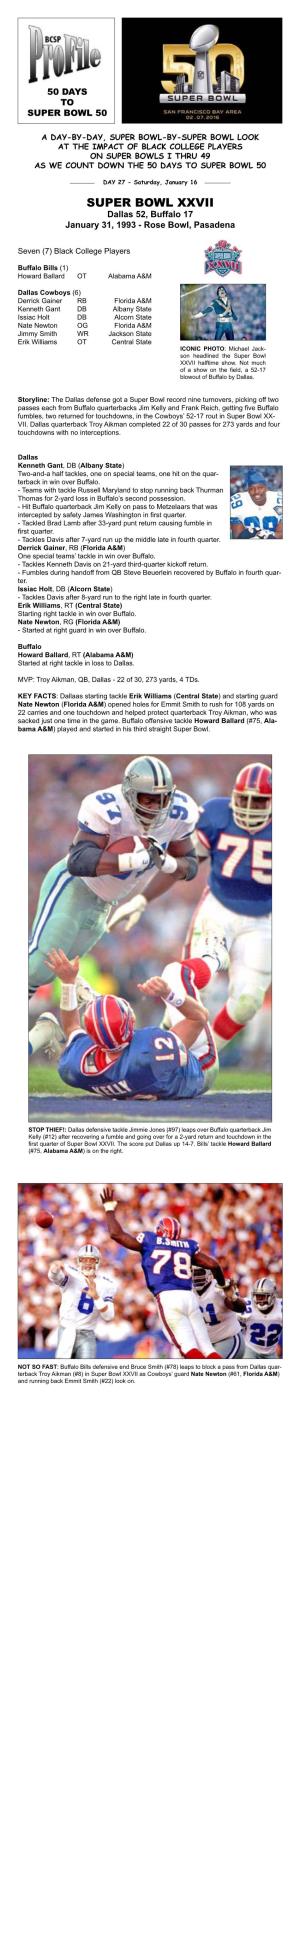 Super Bowl XXVII Dallas 52, Buffalo 17 January 31, 1993 - Rose Bowl, Pasadena